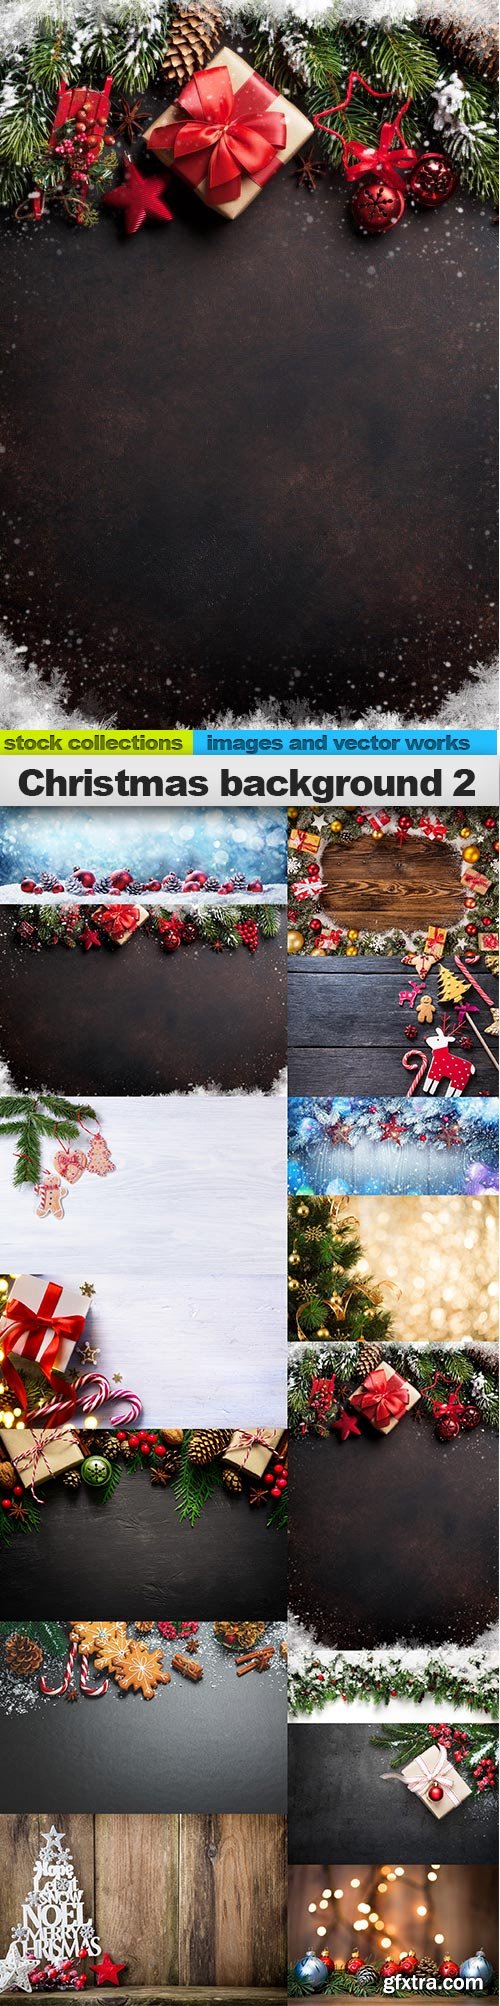 Christmas background 2, 15 x UHQ JPEG